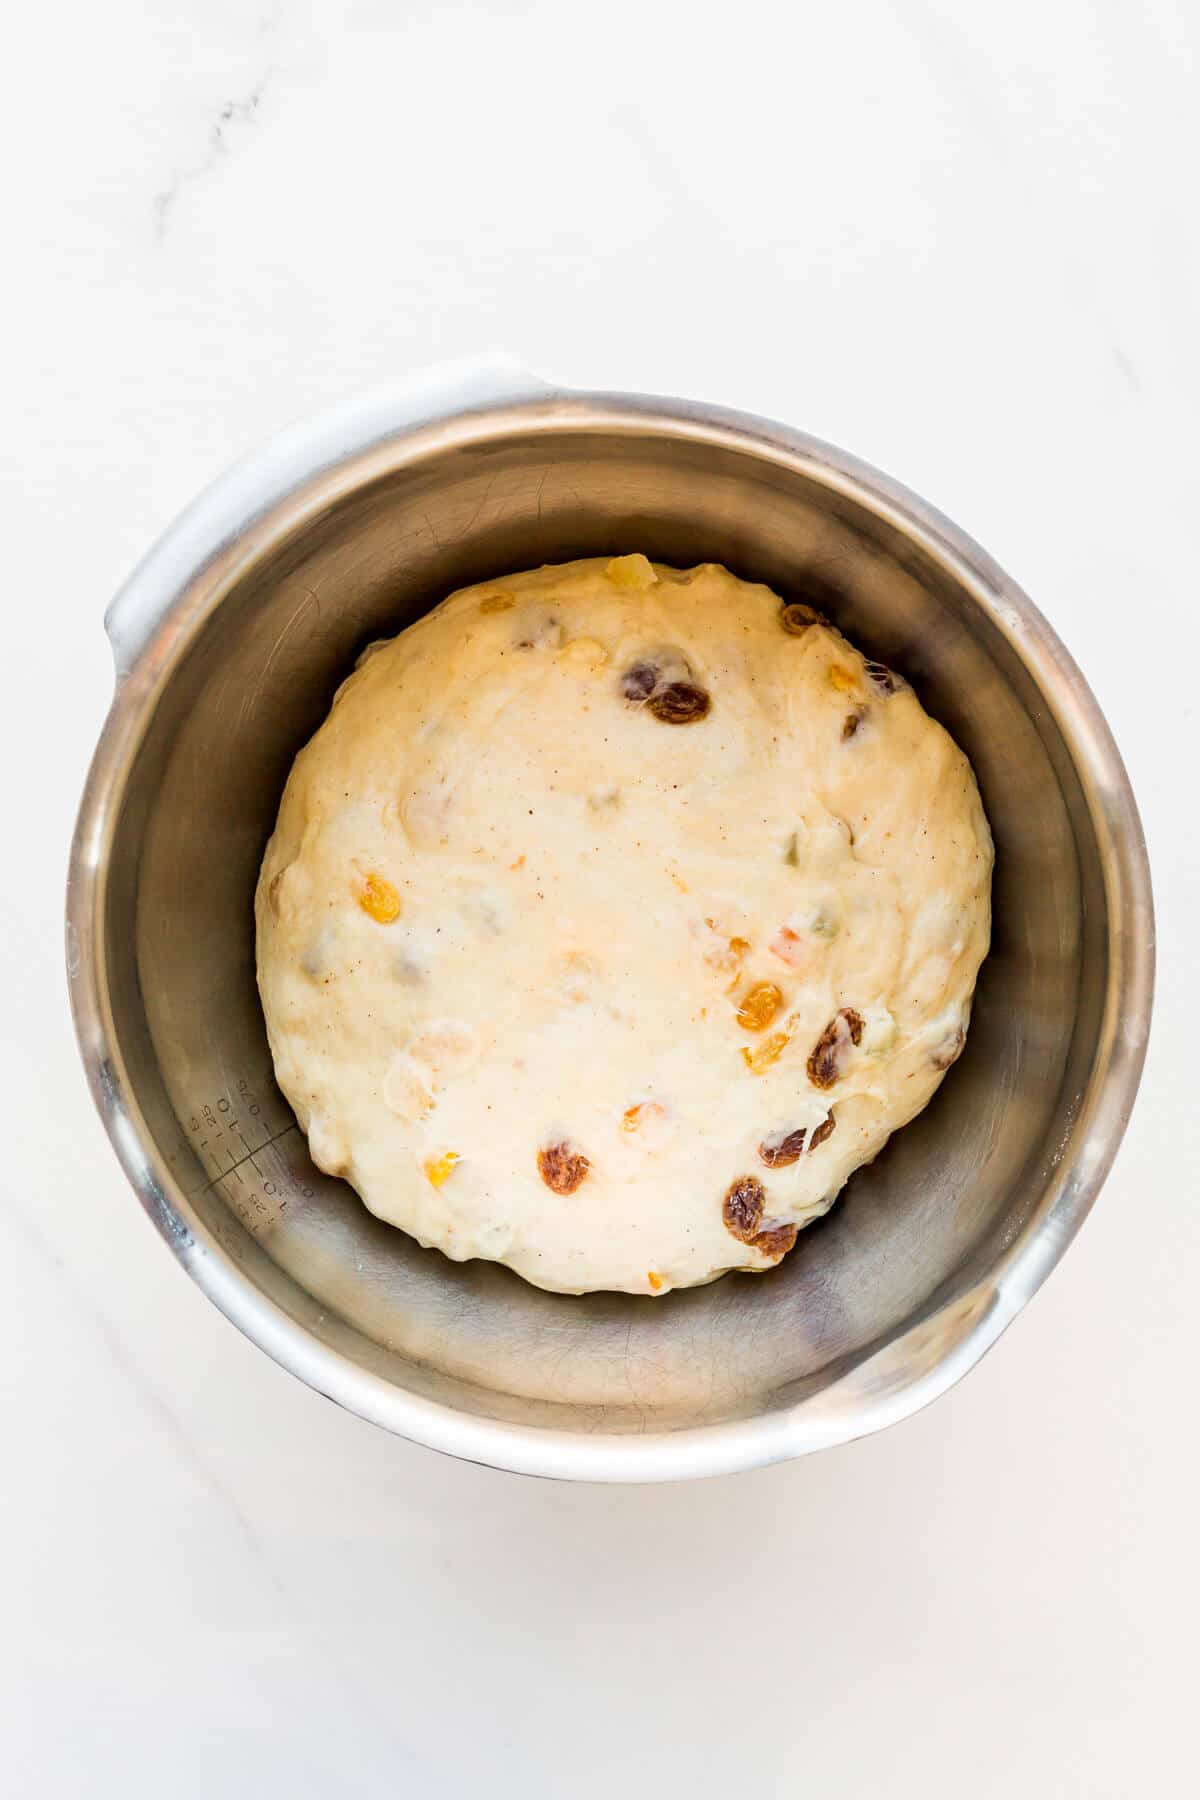 Fruit bread dough with raisins in a bowl, rising.